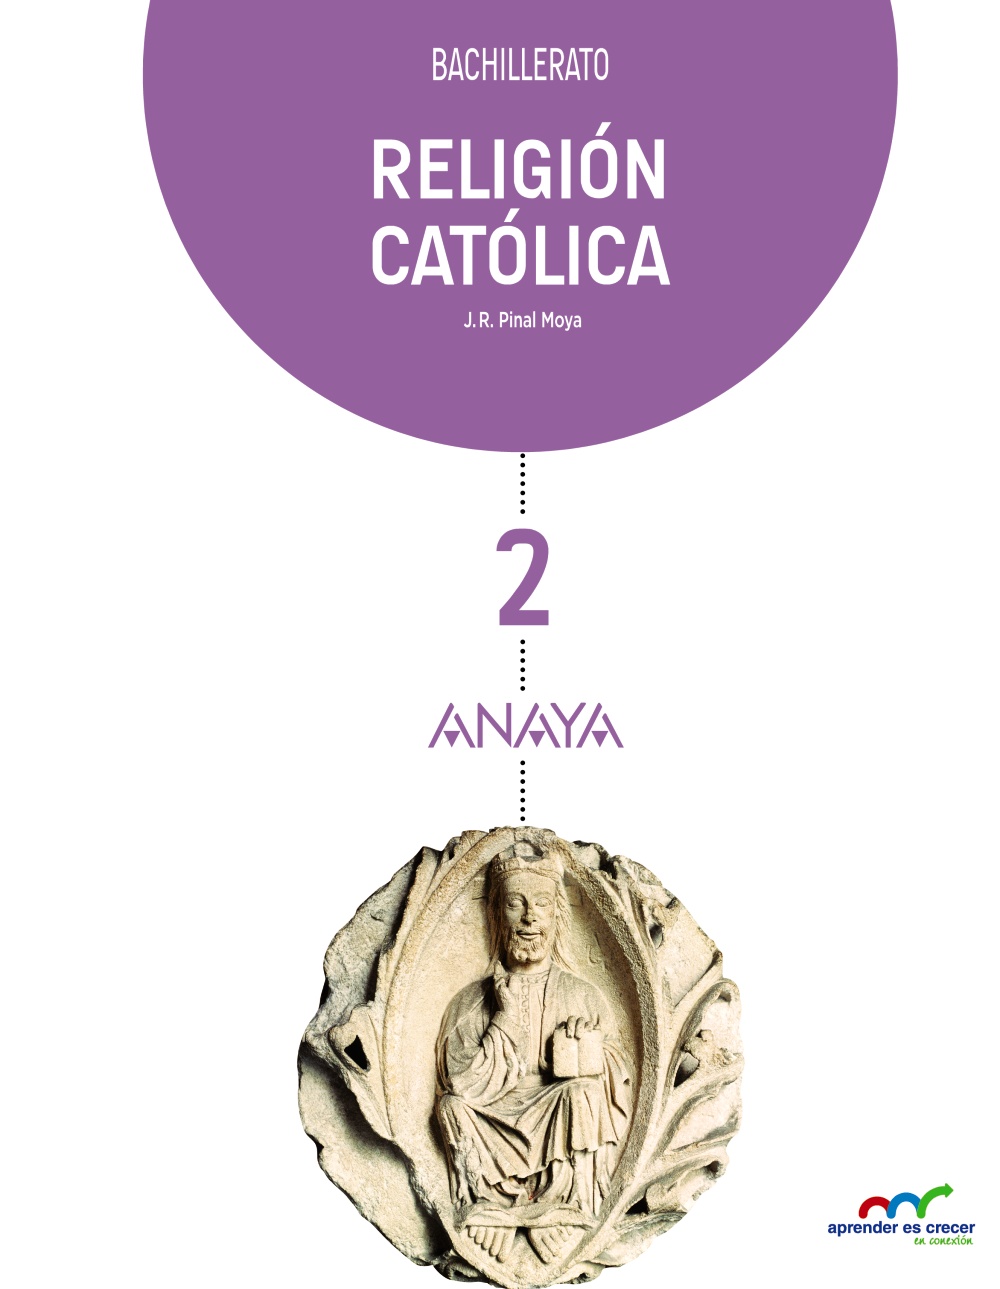 Solucionario Religion Catolica 2 Bachillerato Anaya Aprender es Crecer Soluciones PDF-pdf